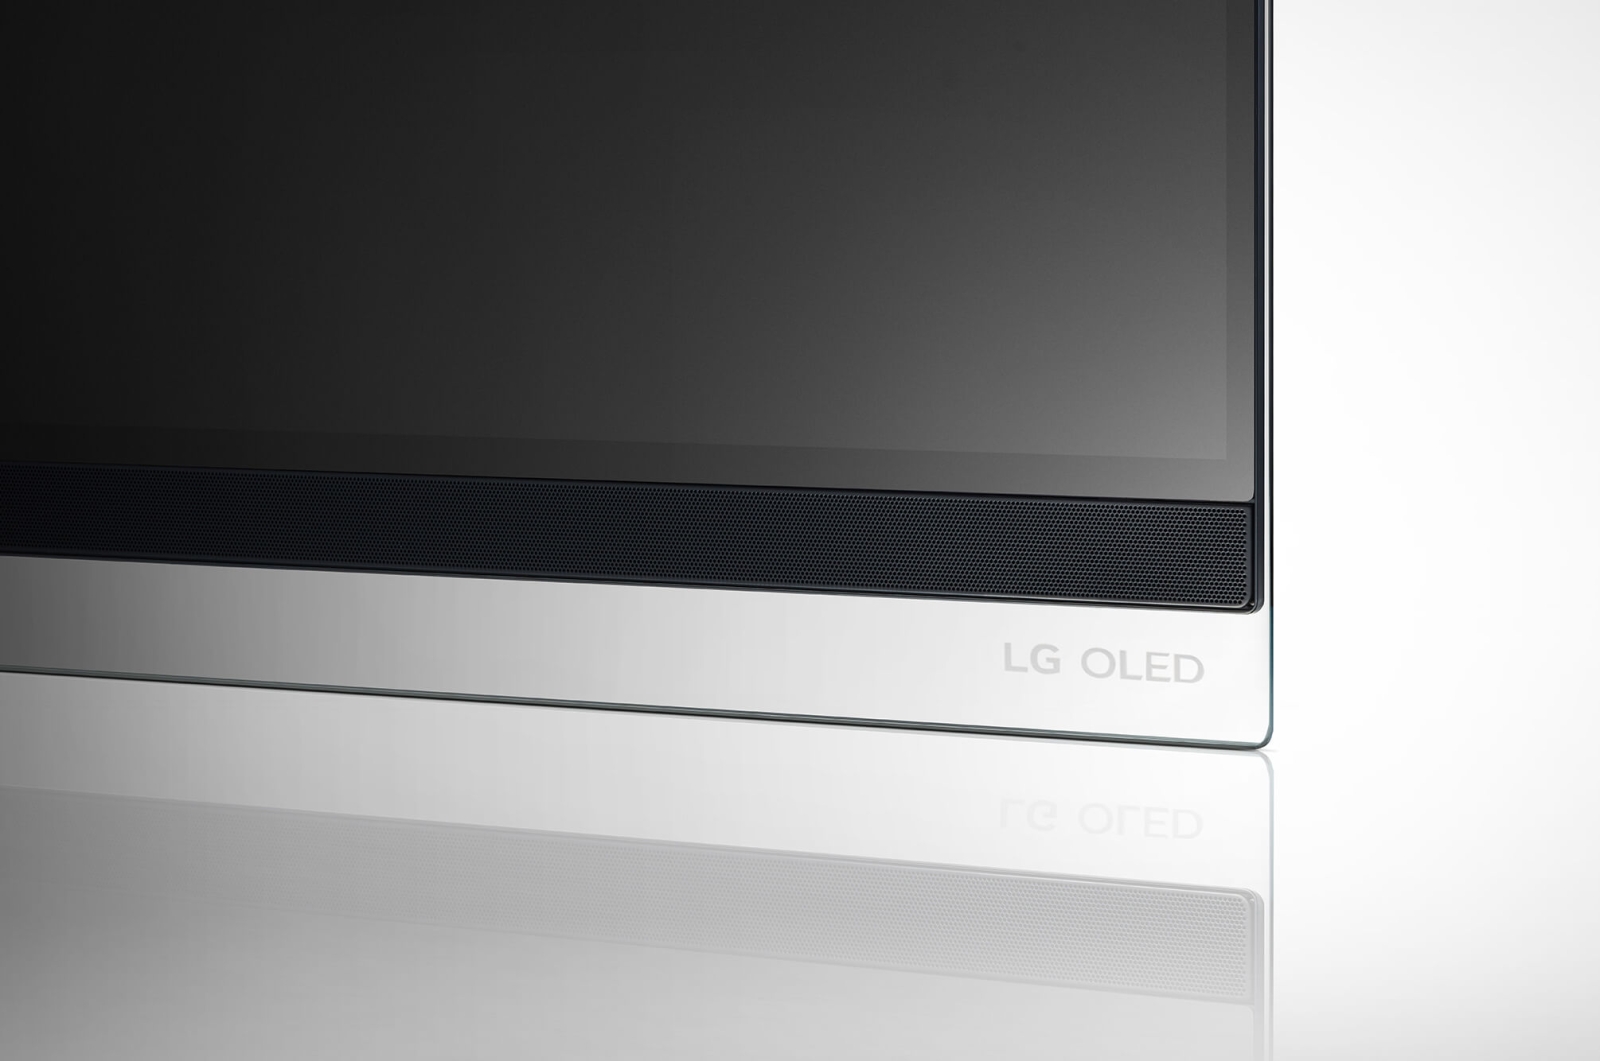 LG TV-OLED-E9 design